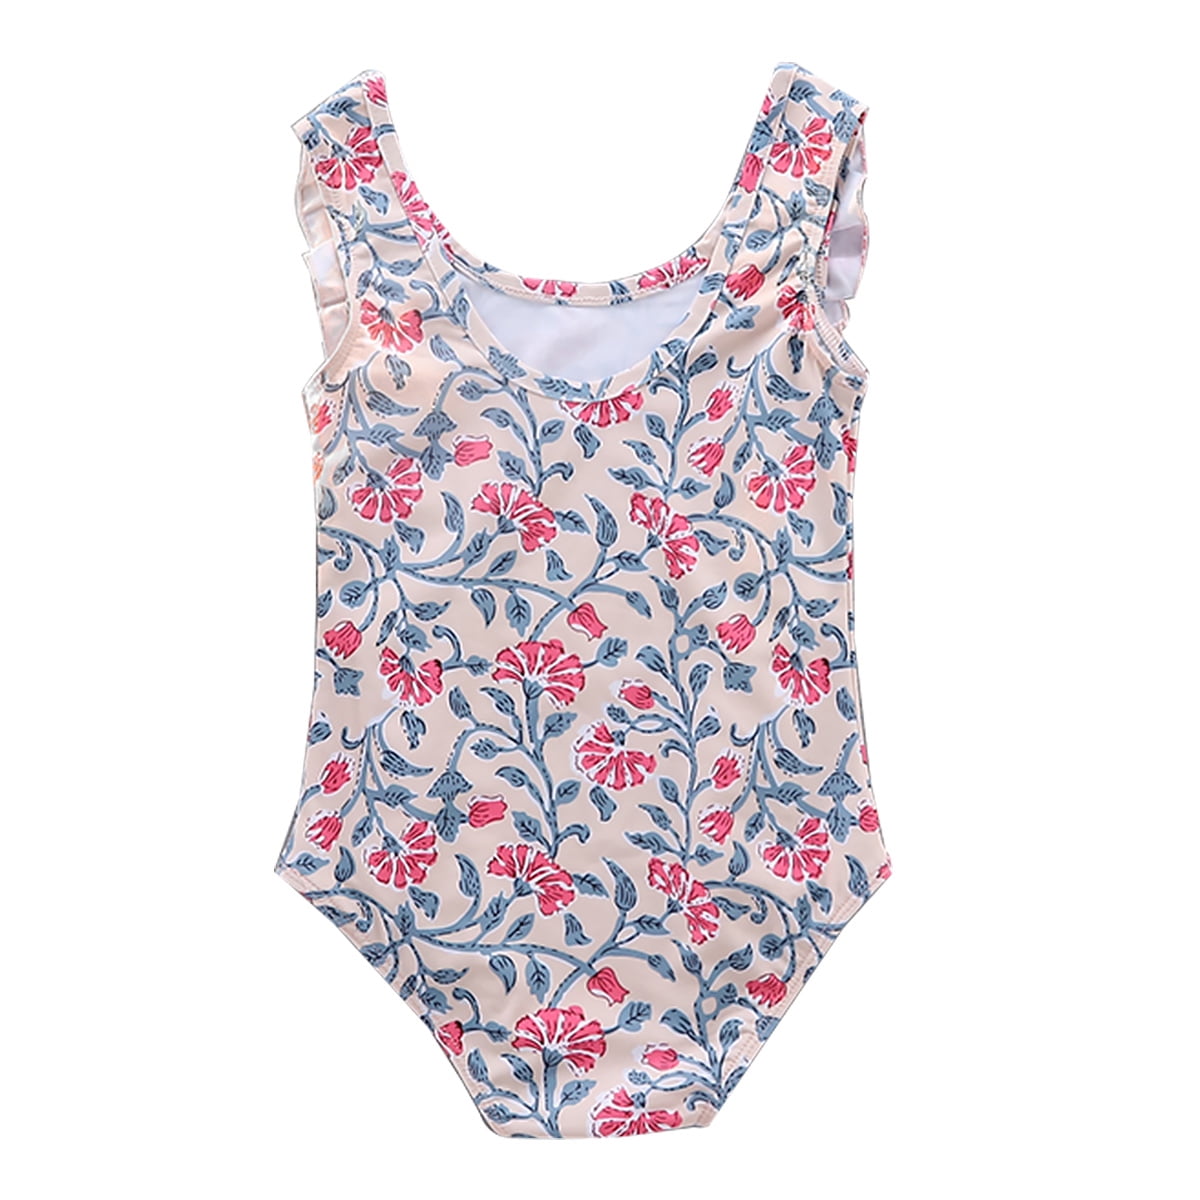 Soui Baby Girls' Swimsuit One Piece UV Protection 50 Swimwear with Zip 